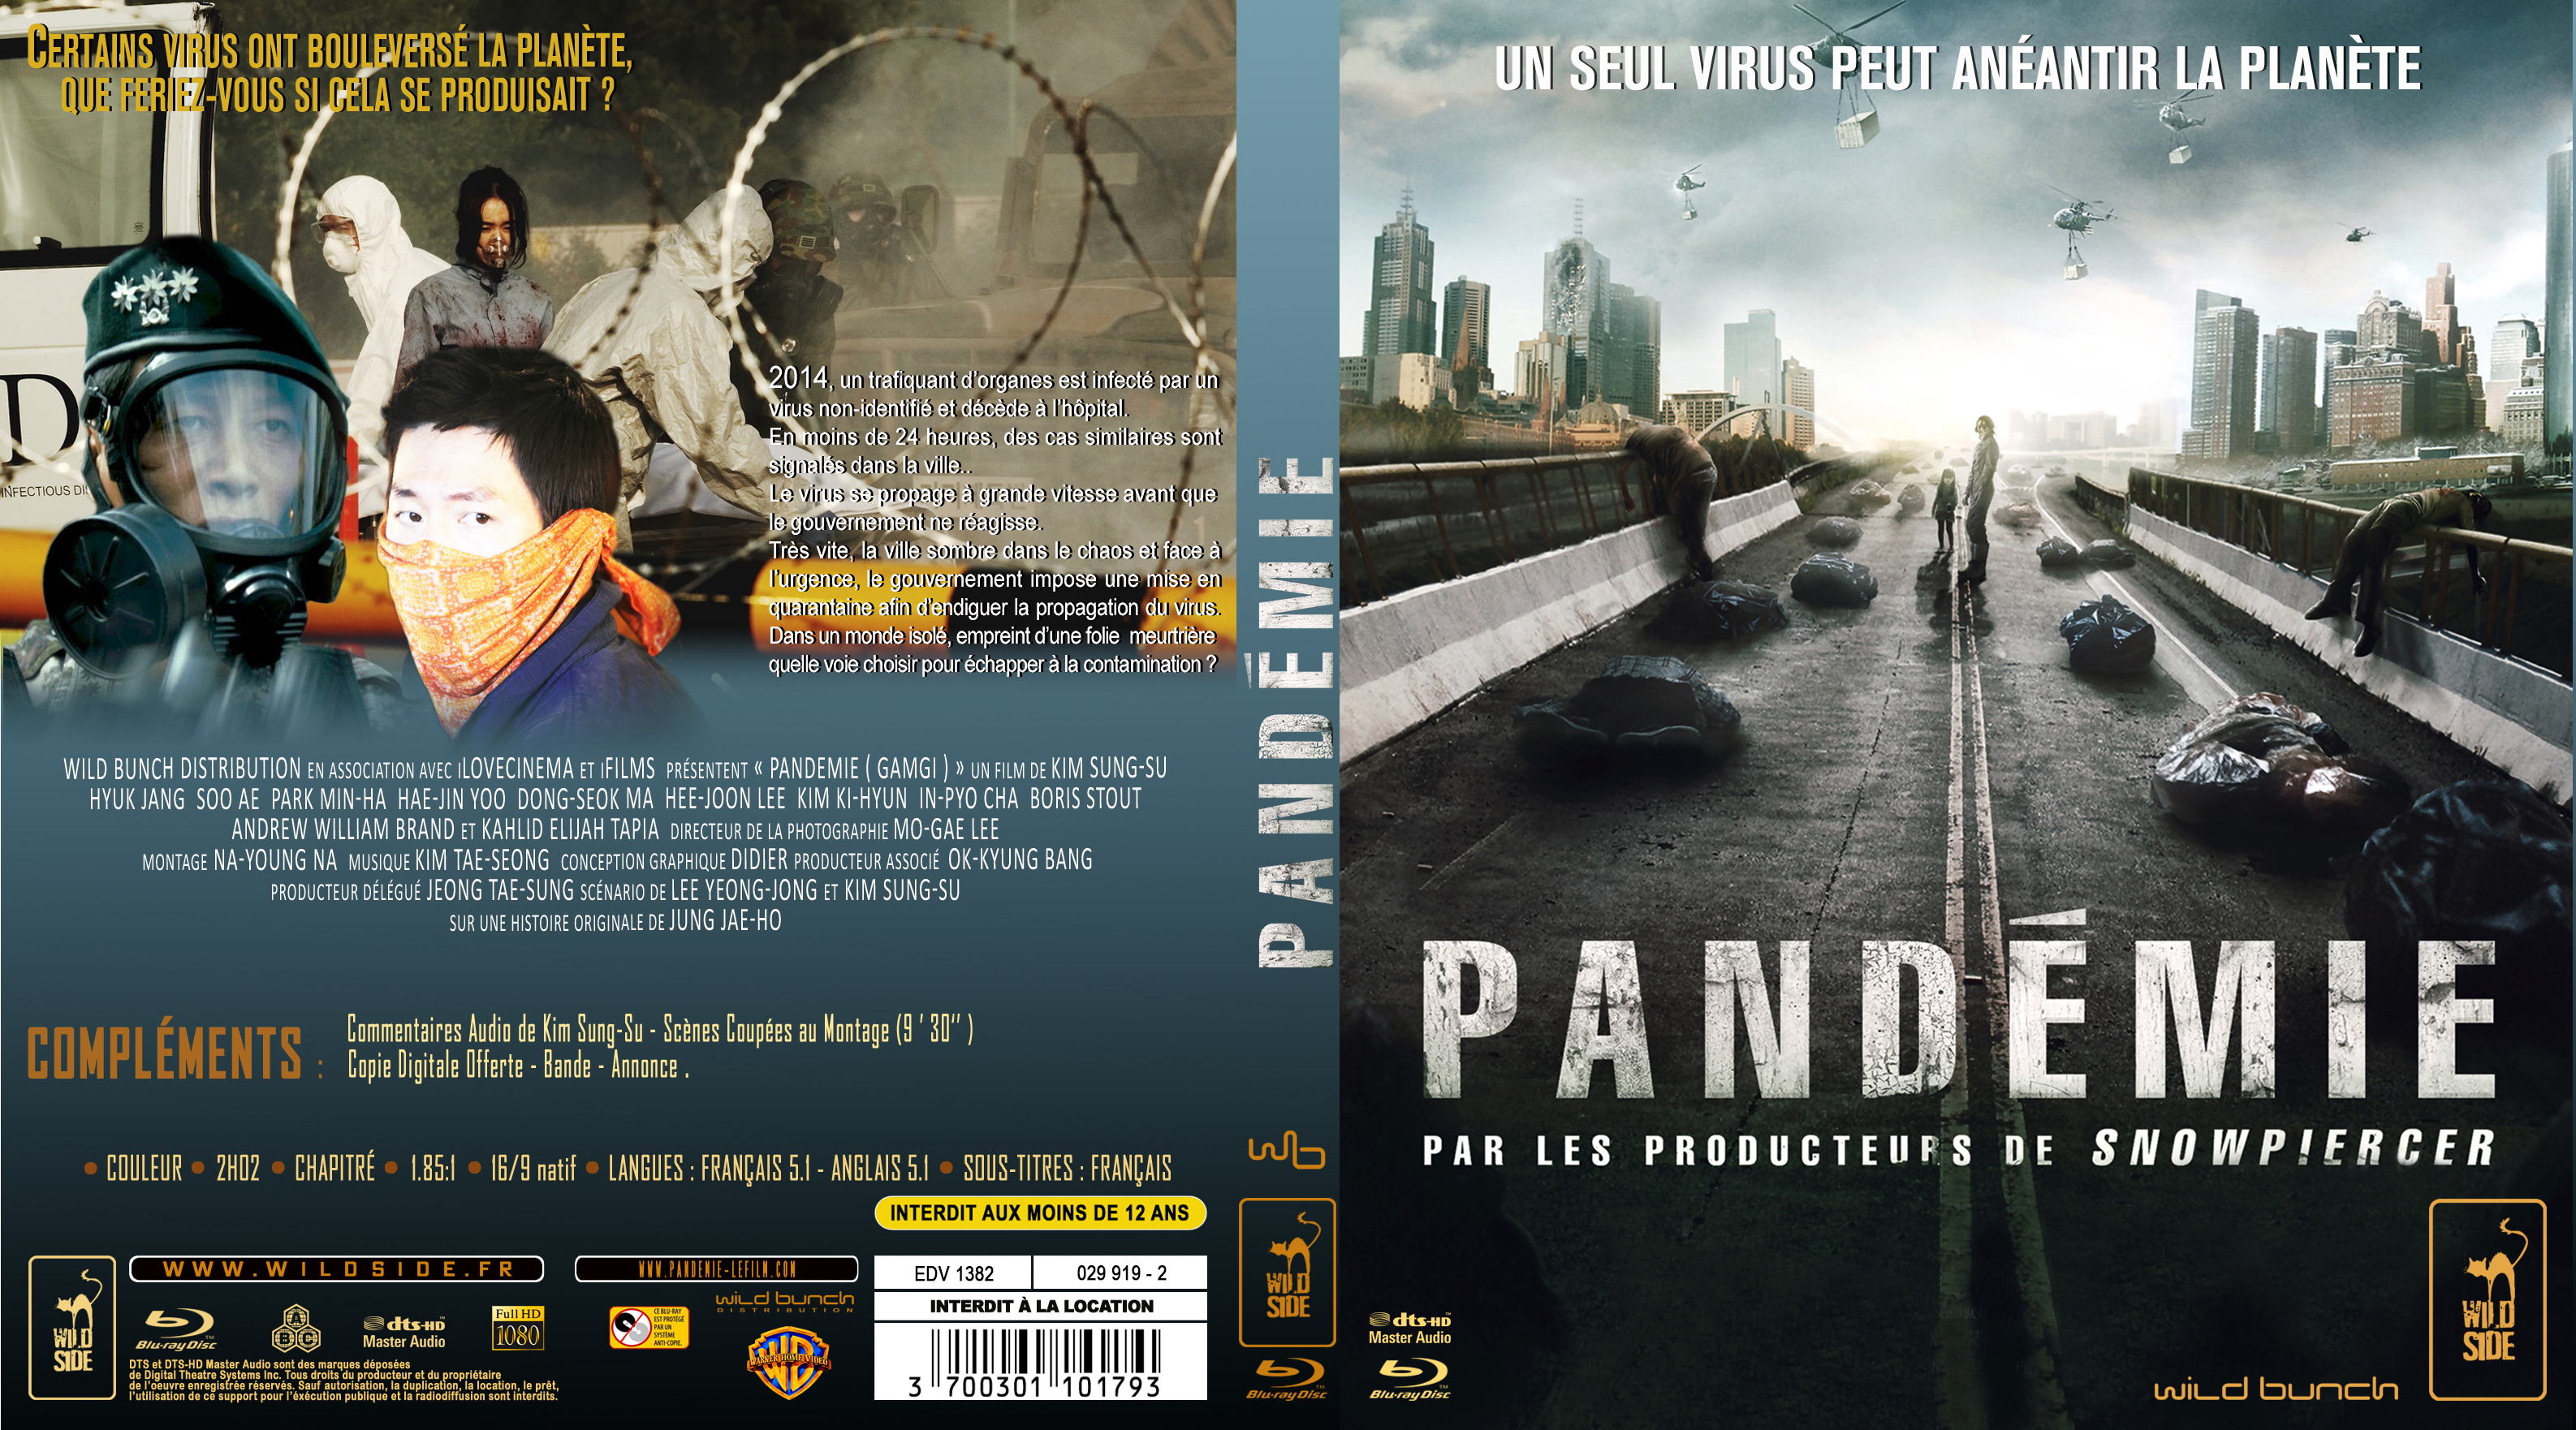 Jaquette DVD Pandmie custom (BLU-RAY)